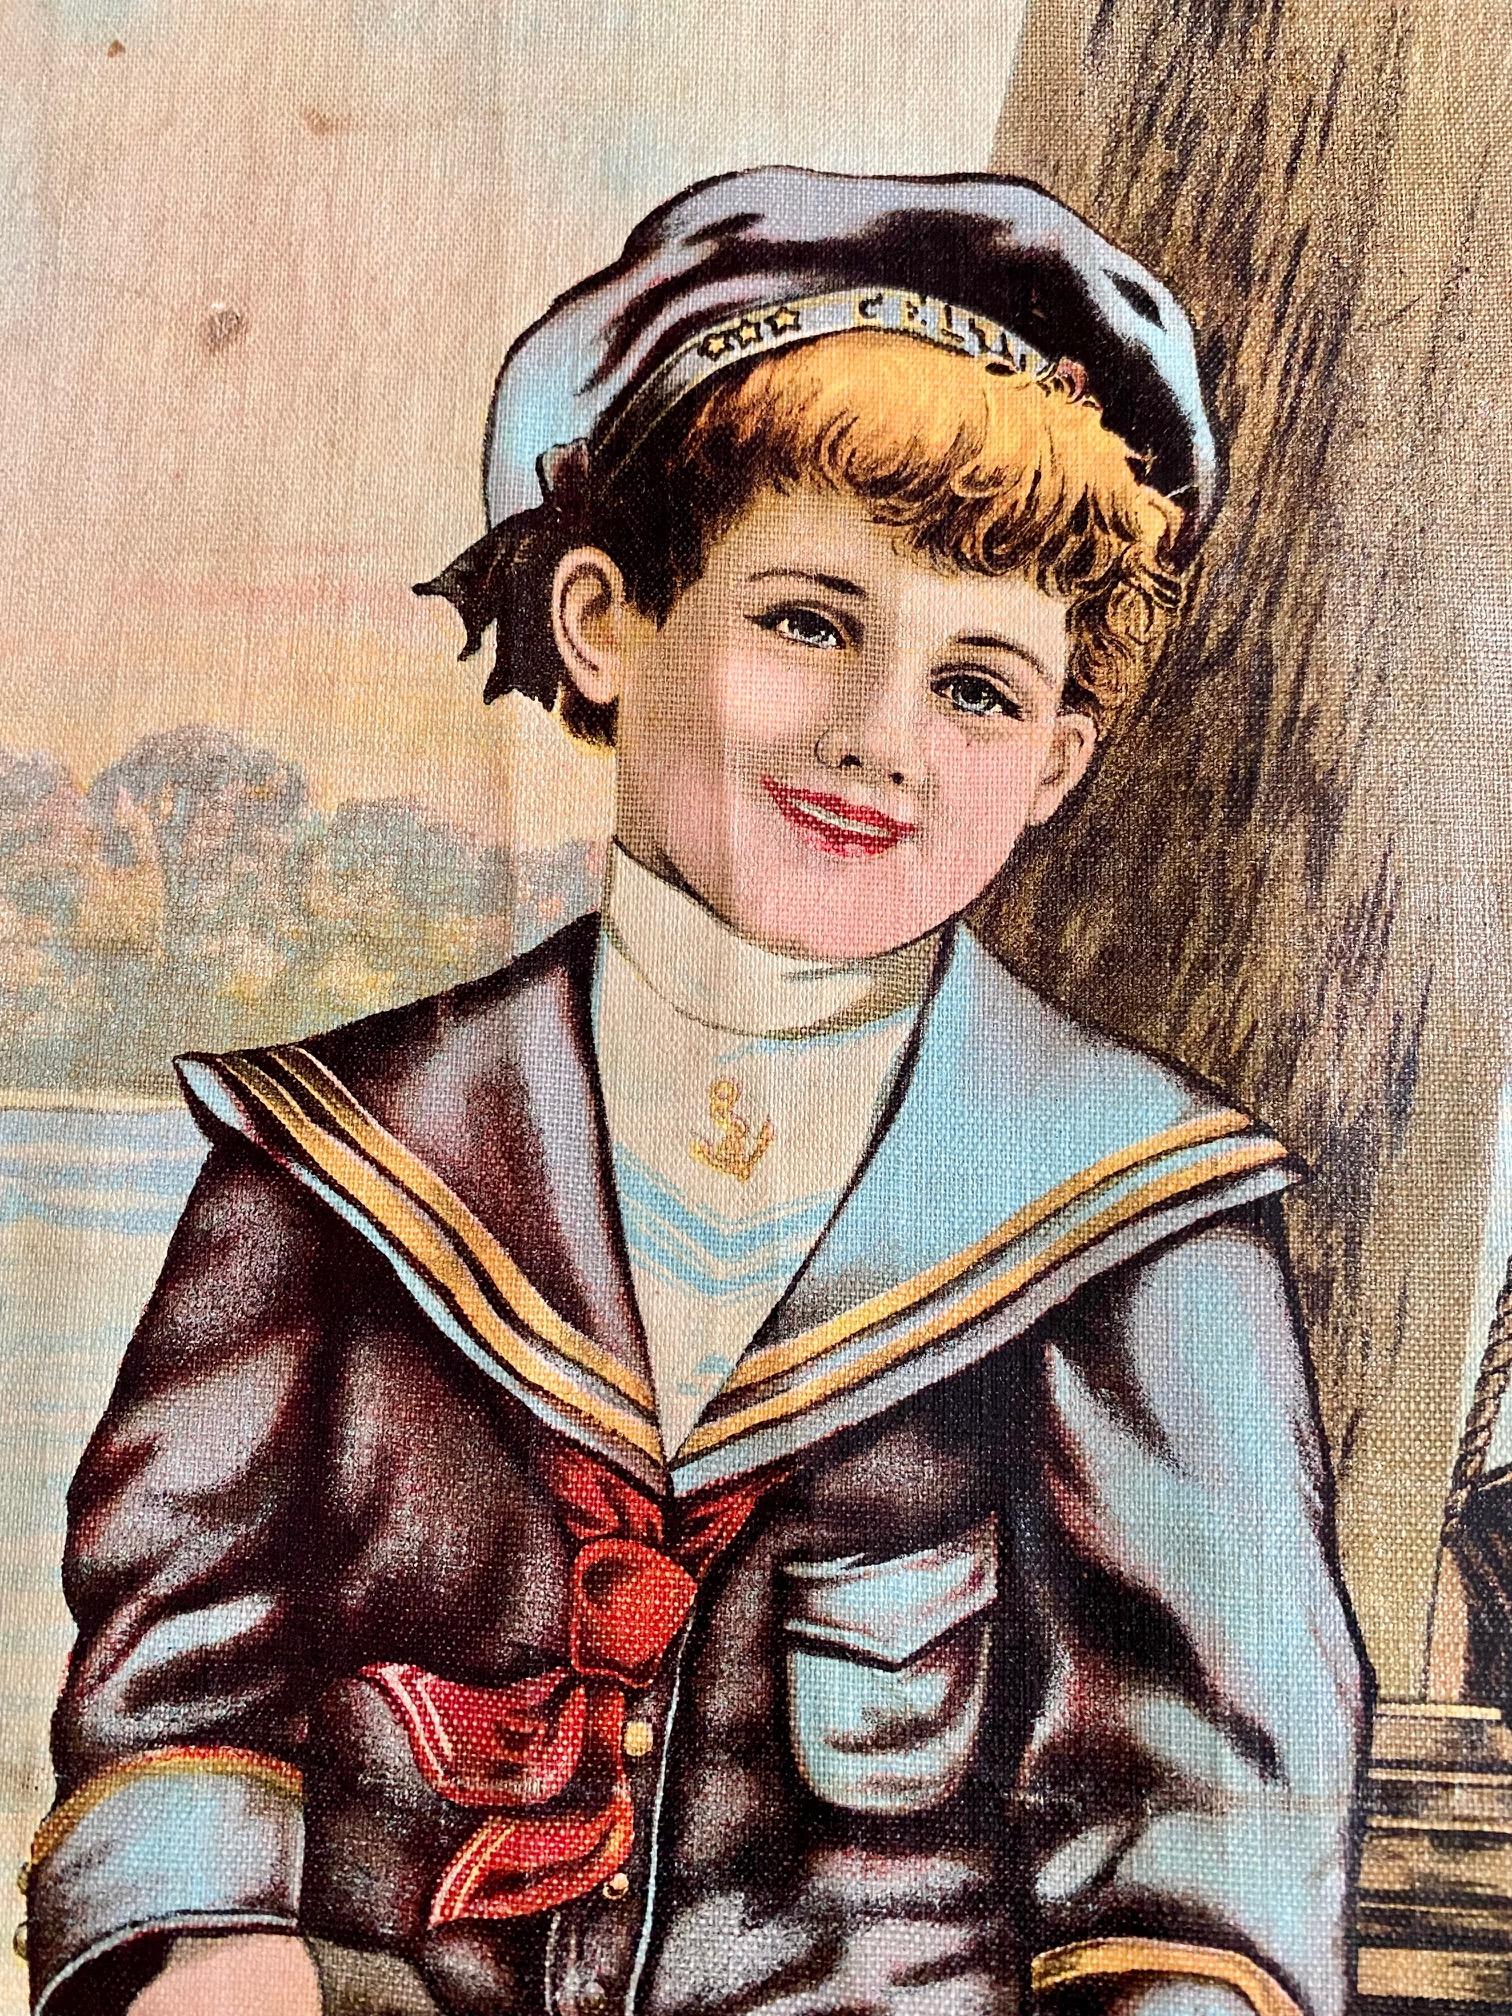 sailor boy painting